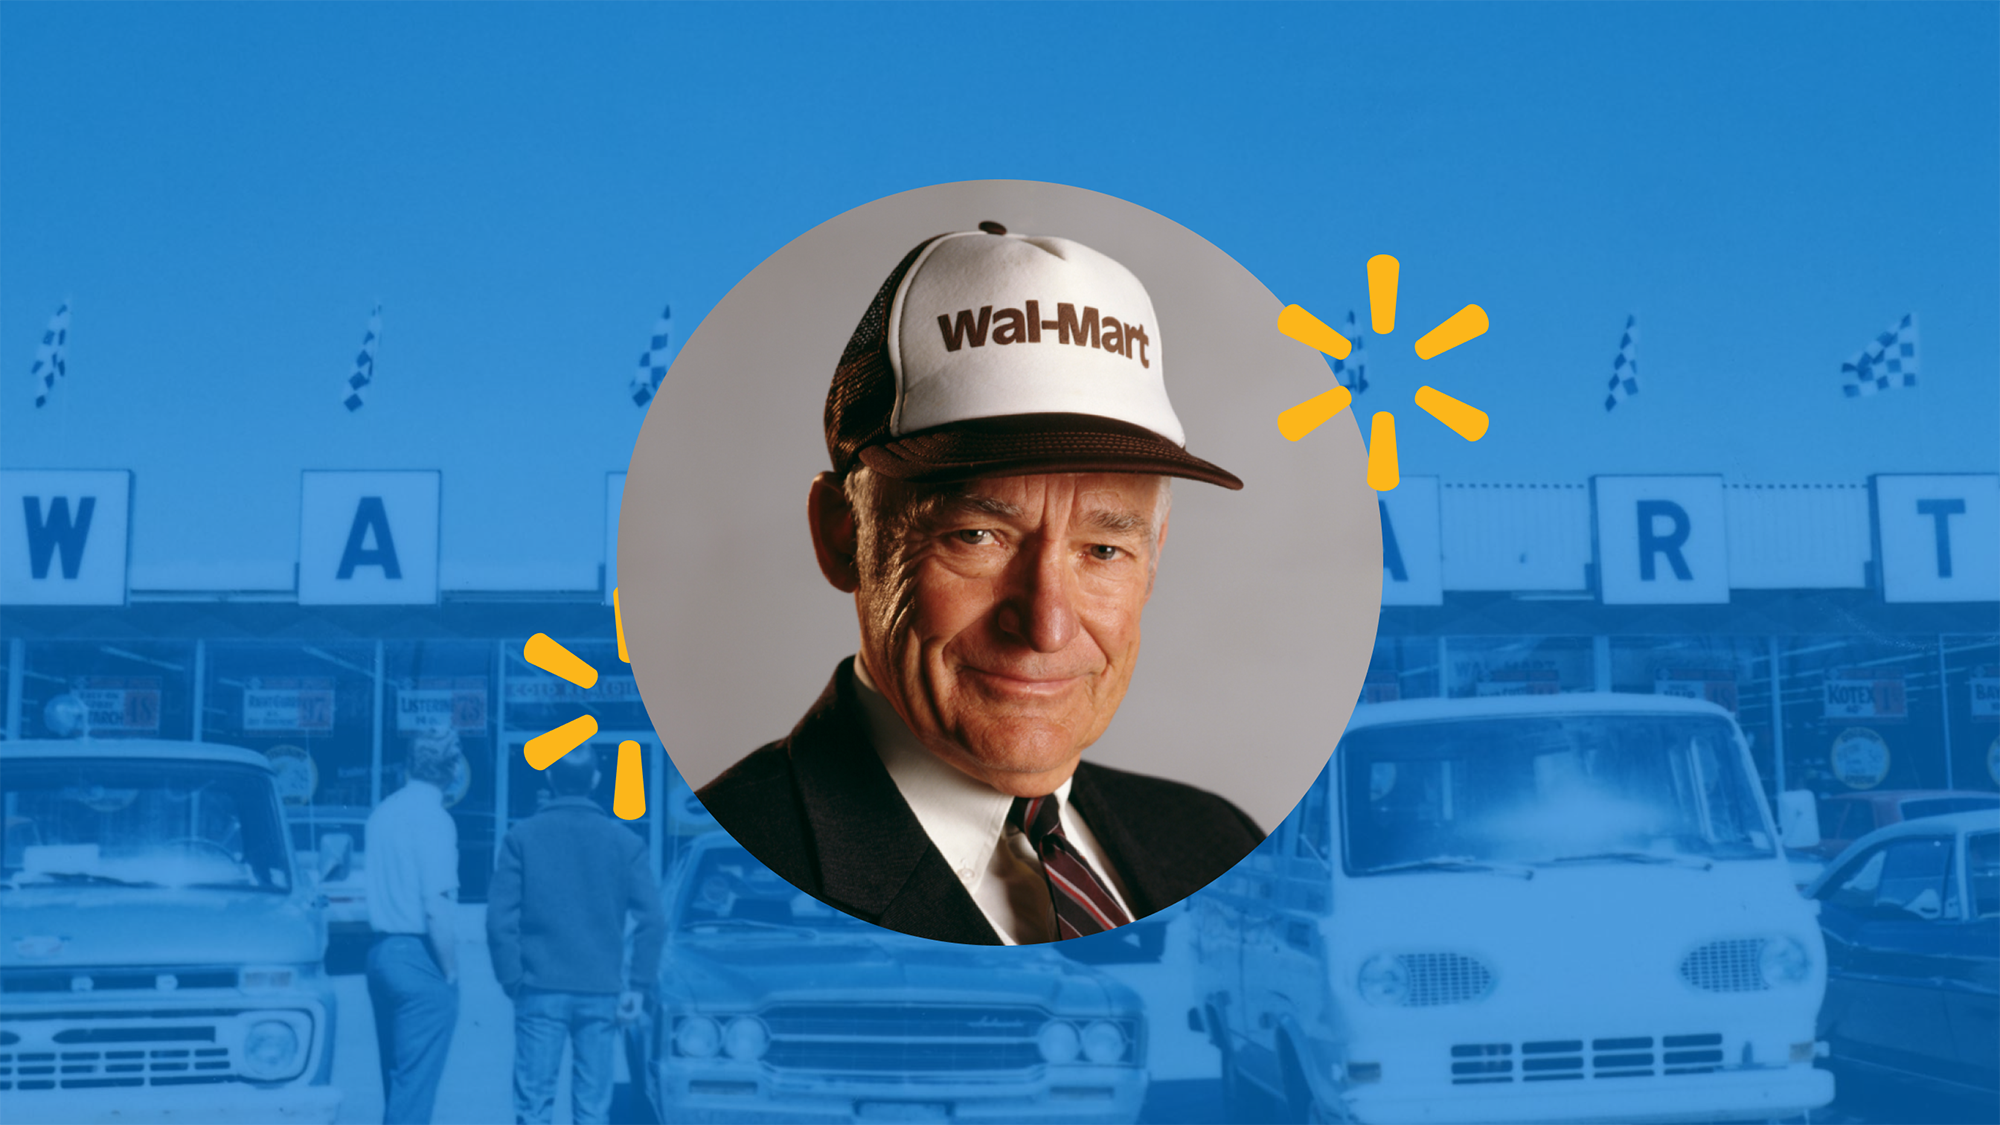 Highlighting Sam Walton, the founder of Walmart